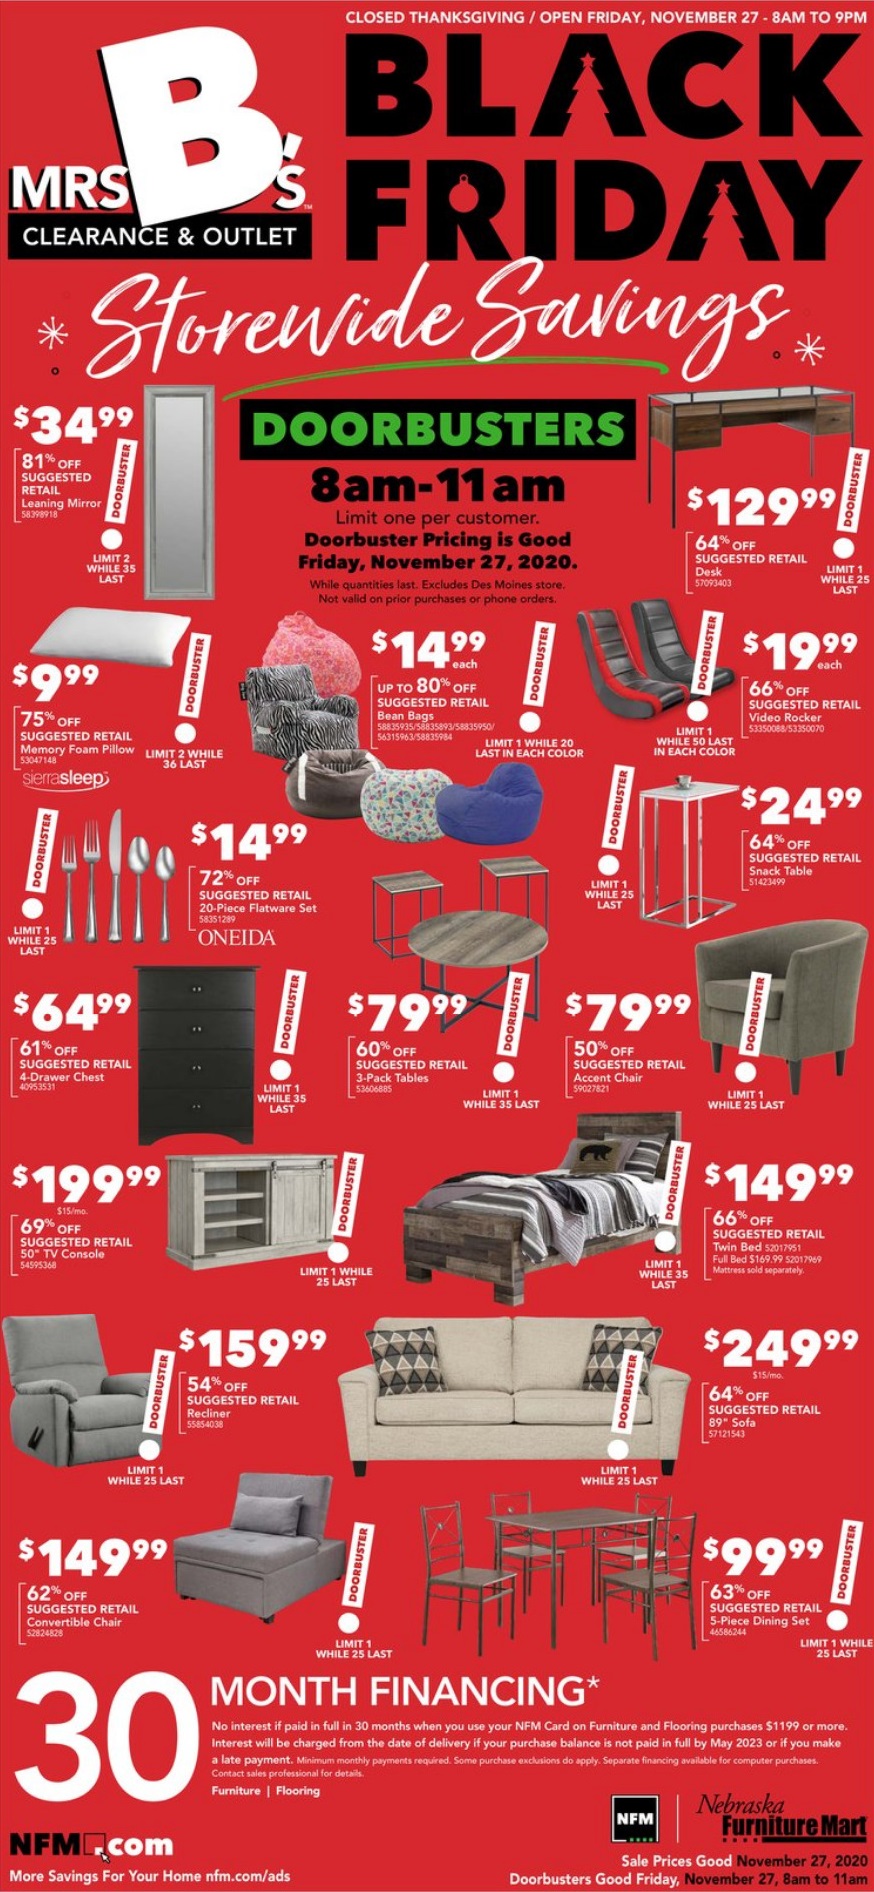 Nebraska Furniture Mart 2020 Black Friday Ad Frugal Buzz